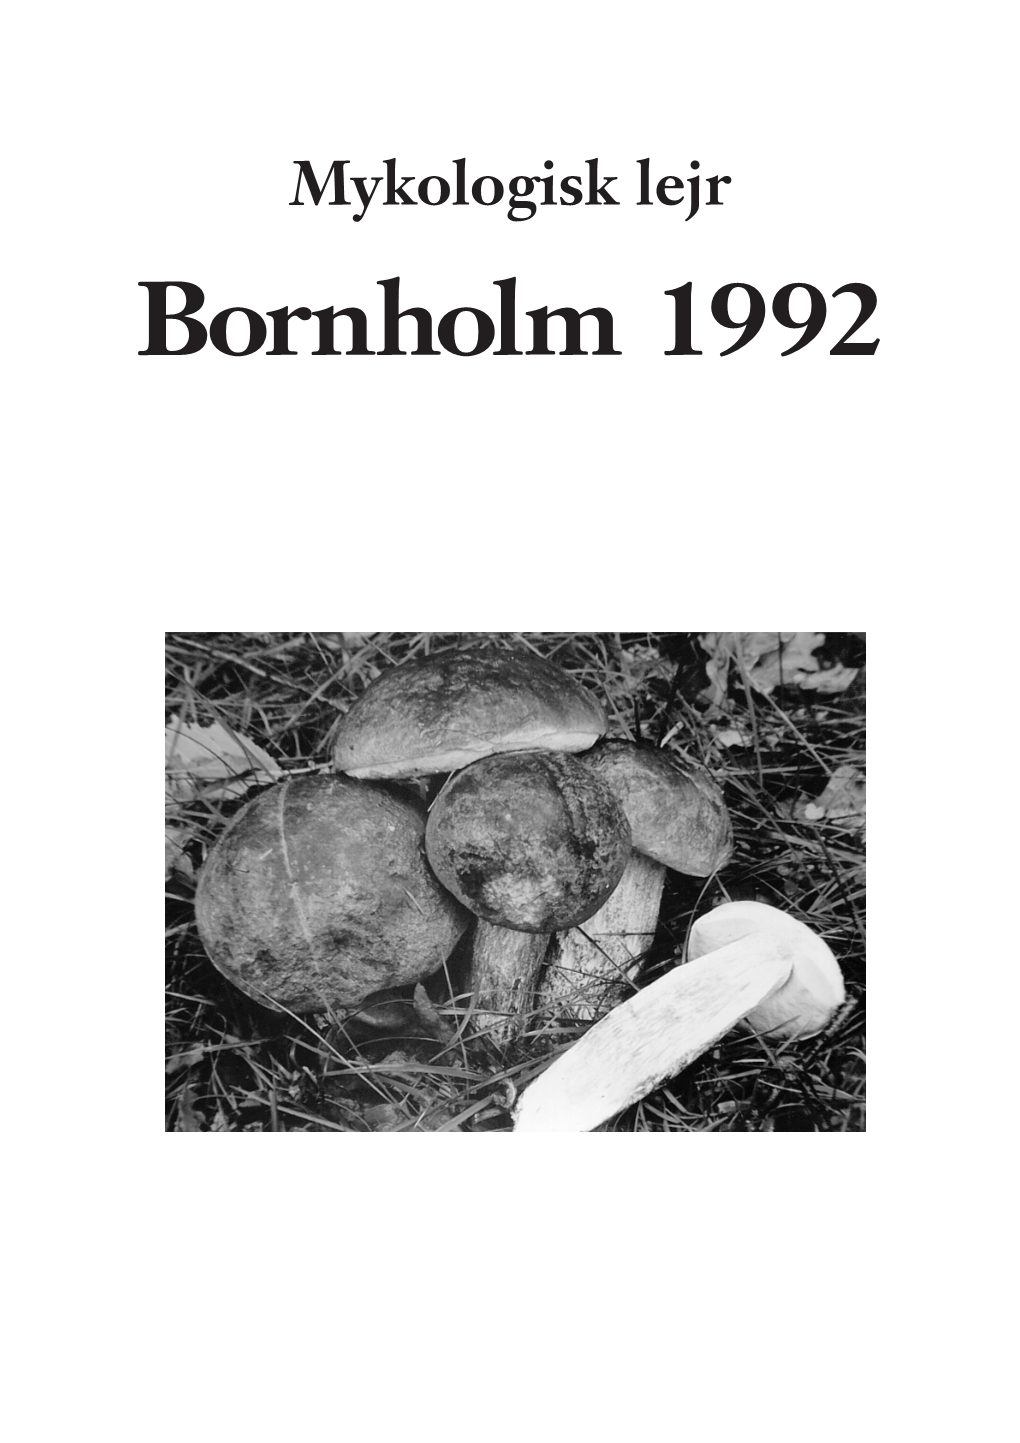 Bornholm 1992 Mykologisk Lejr, Bornholm 1992 1